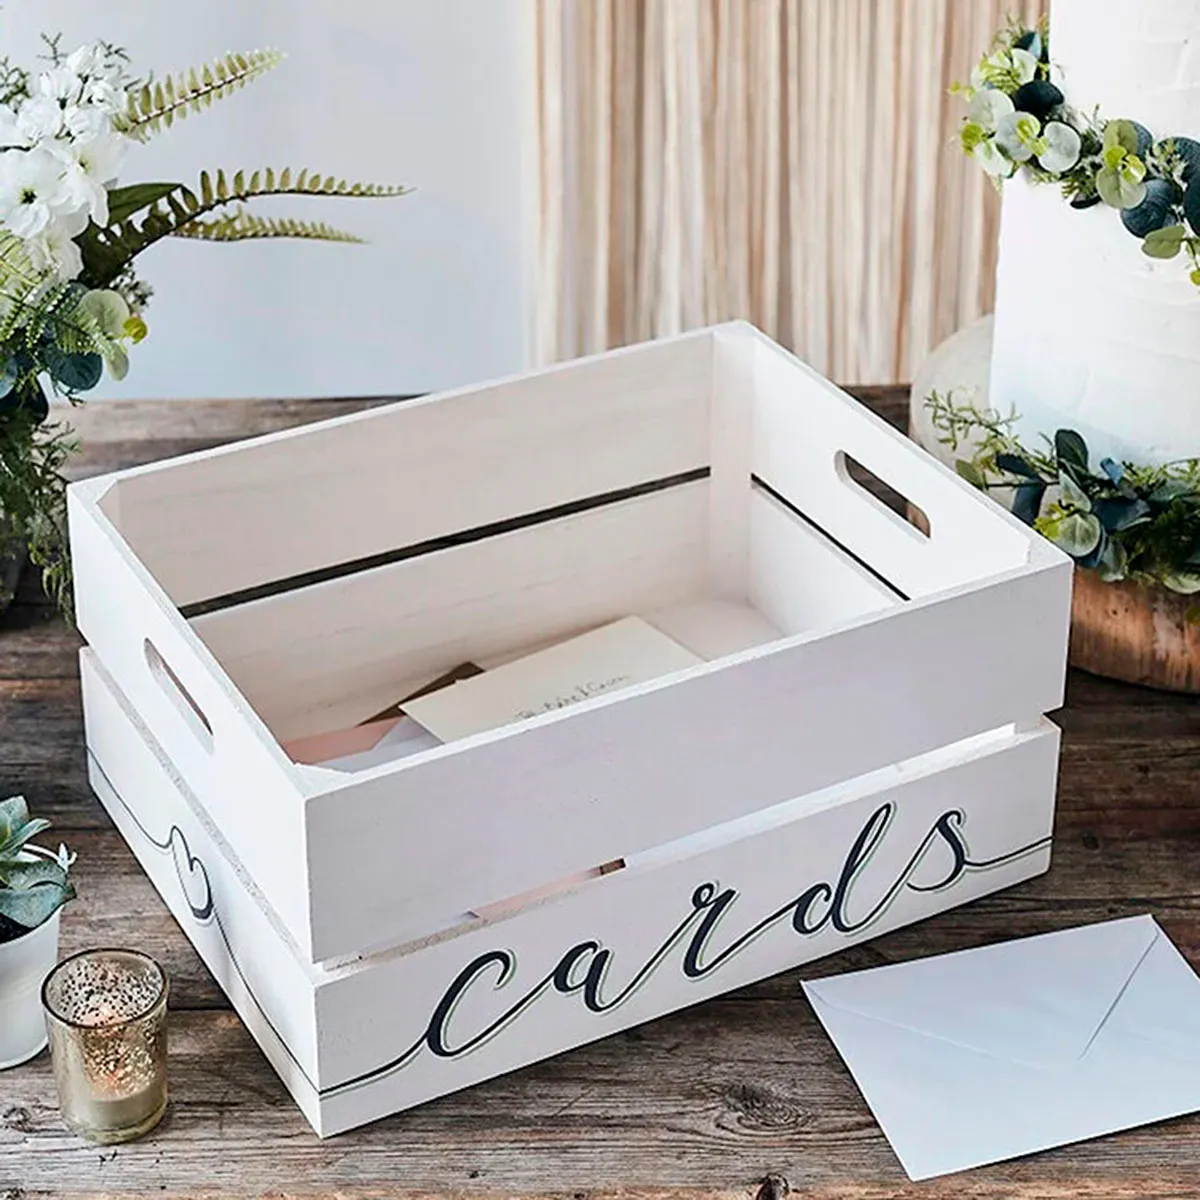 DIY wedding card crate